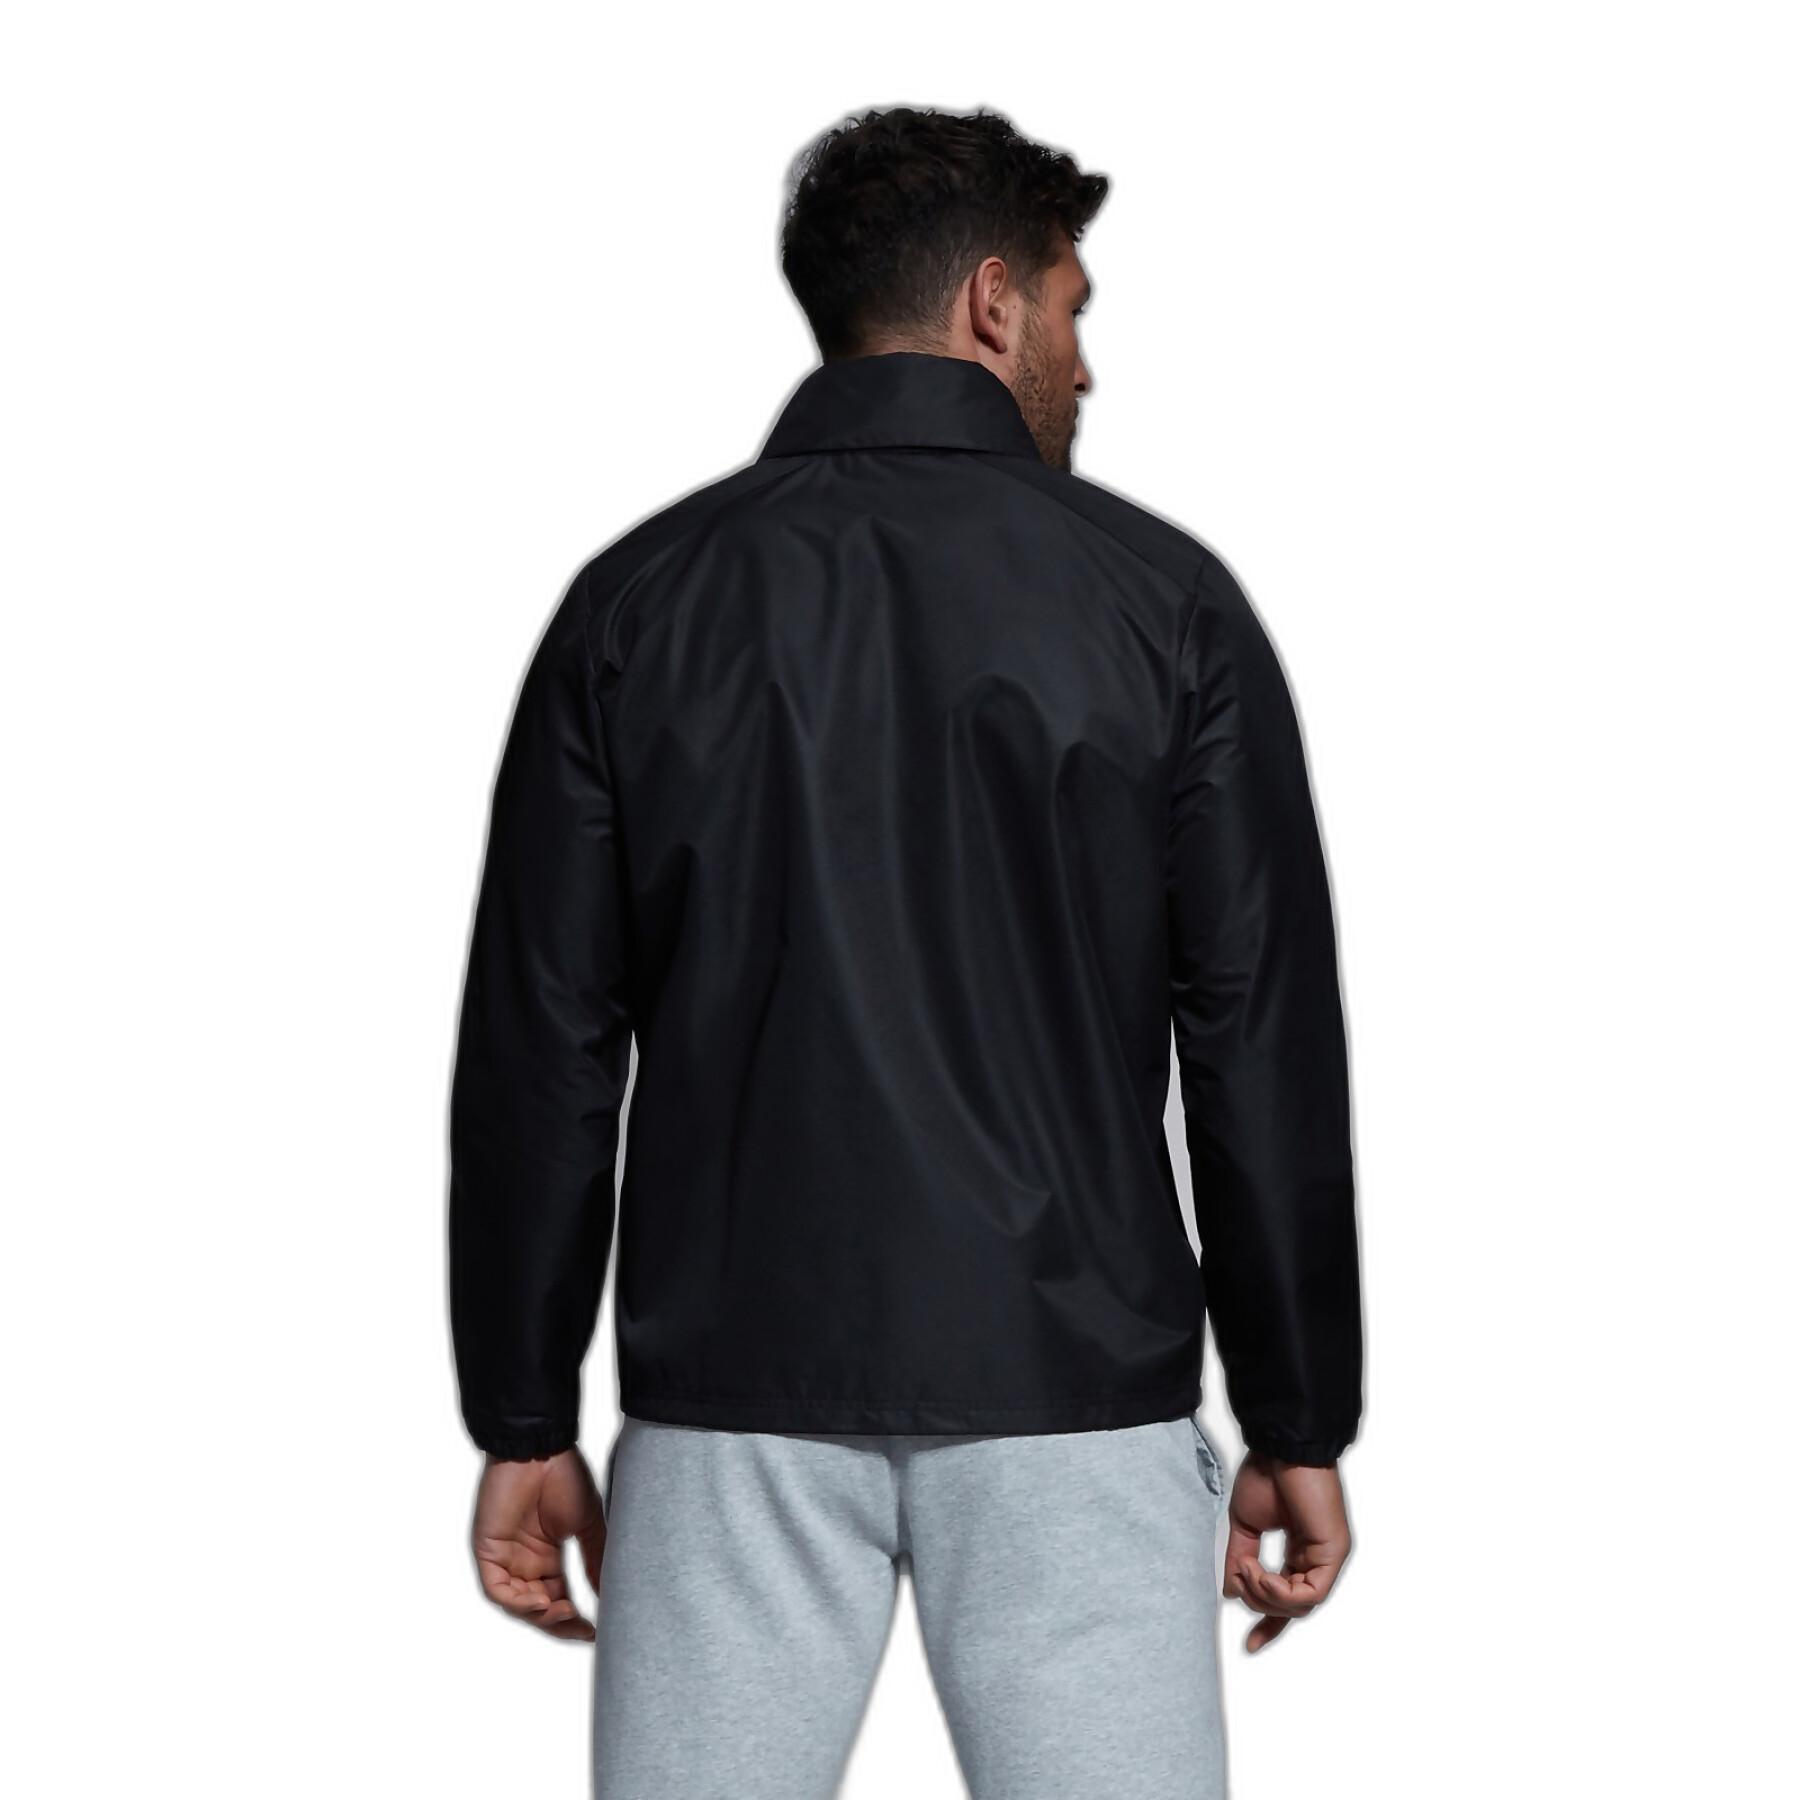 Waterproof zipped jacket Canterbury Club Vaposhield